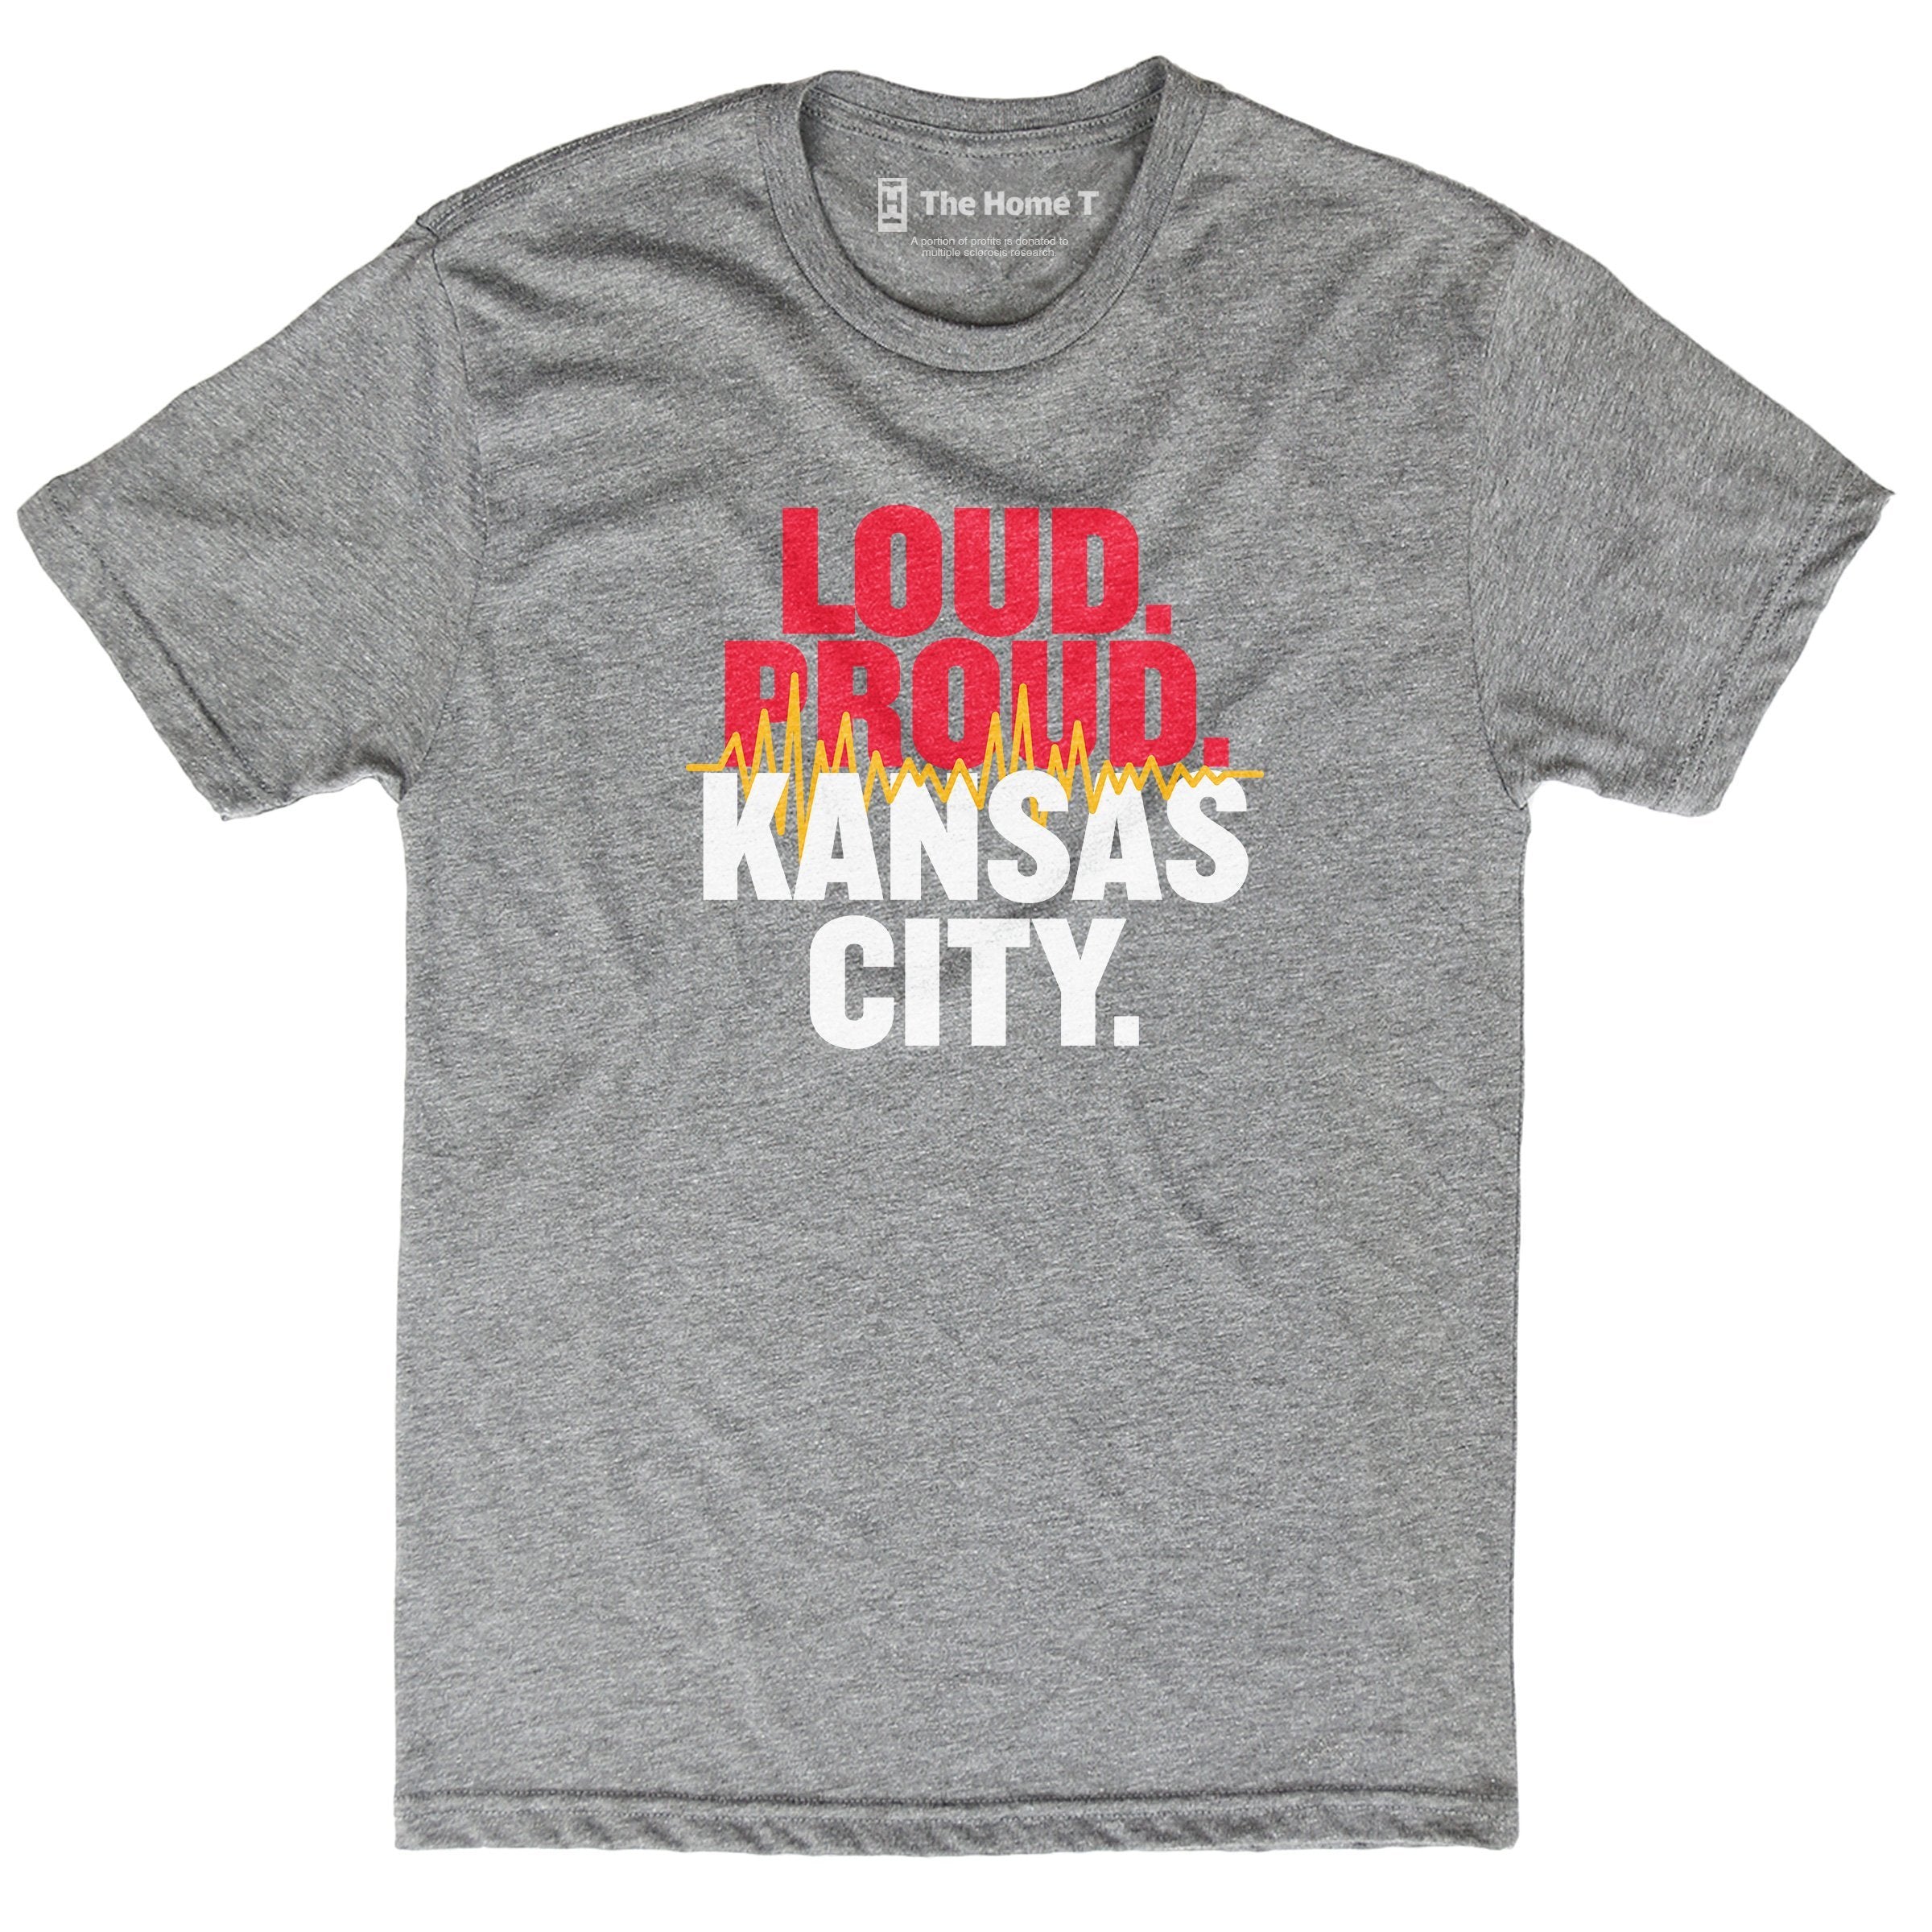 Loud. Proud. Kansas City.